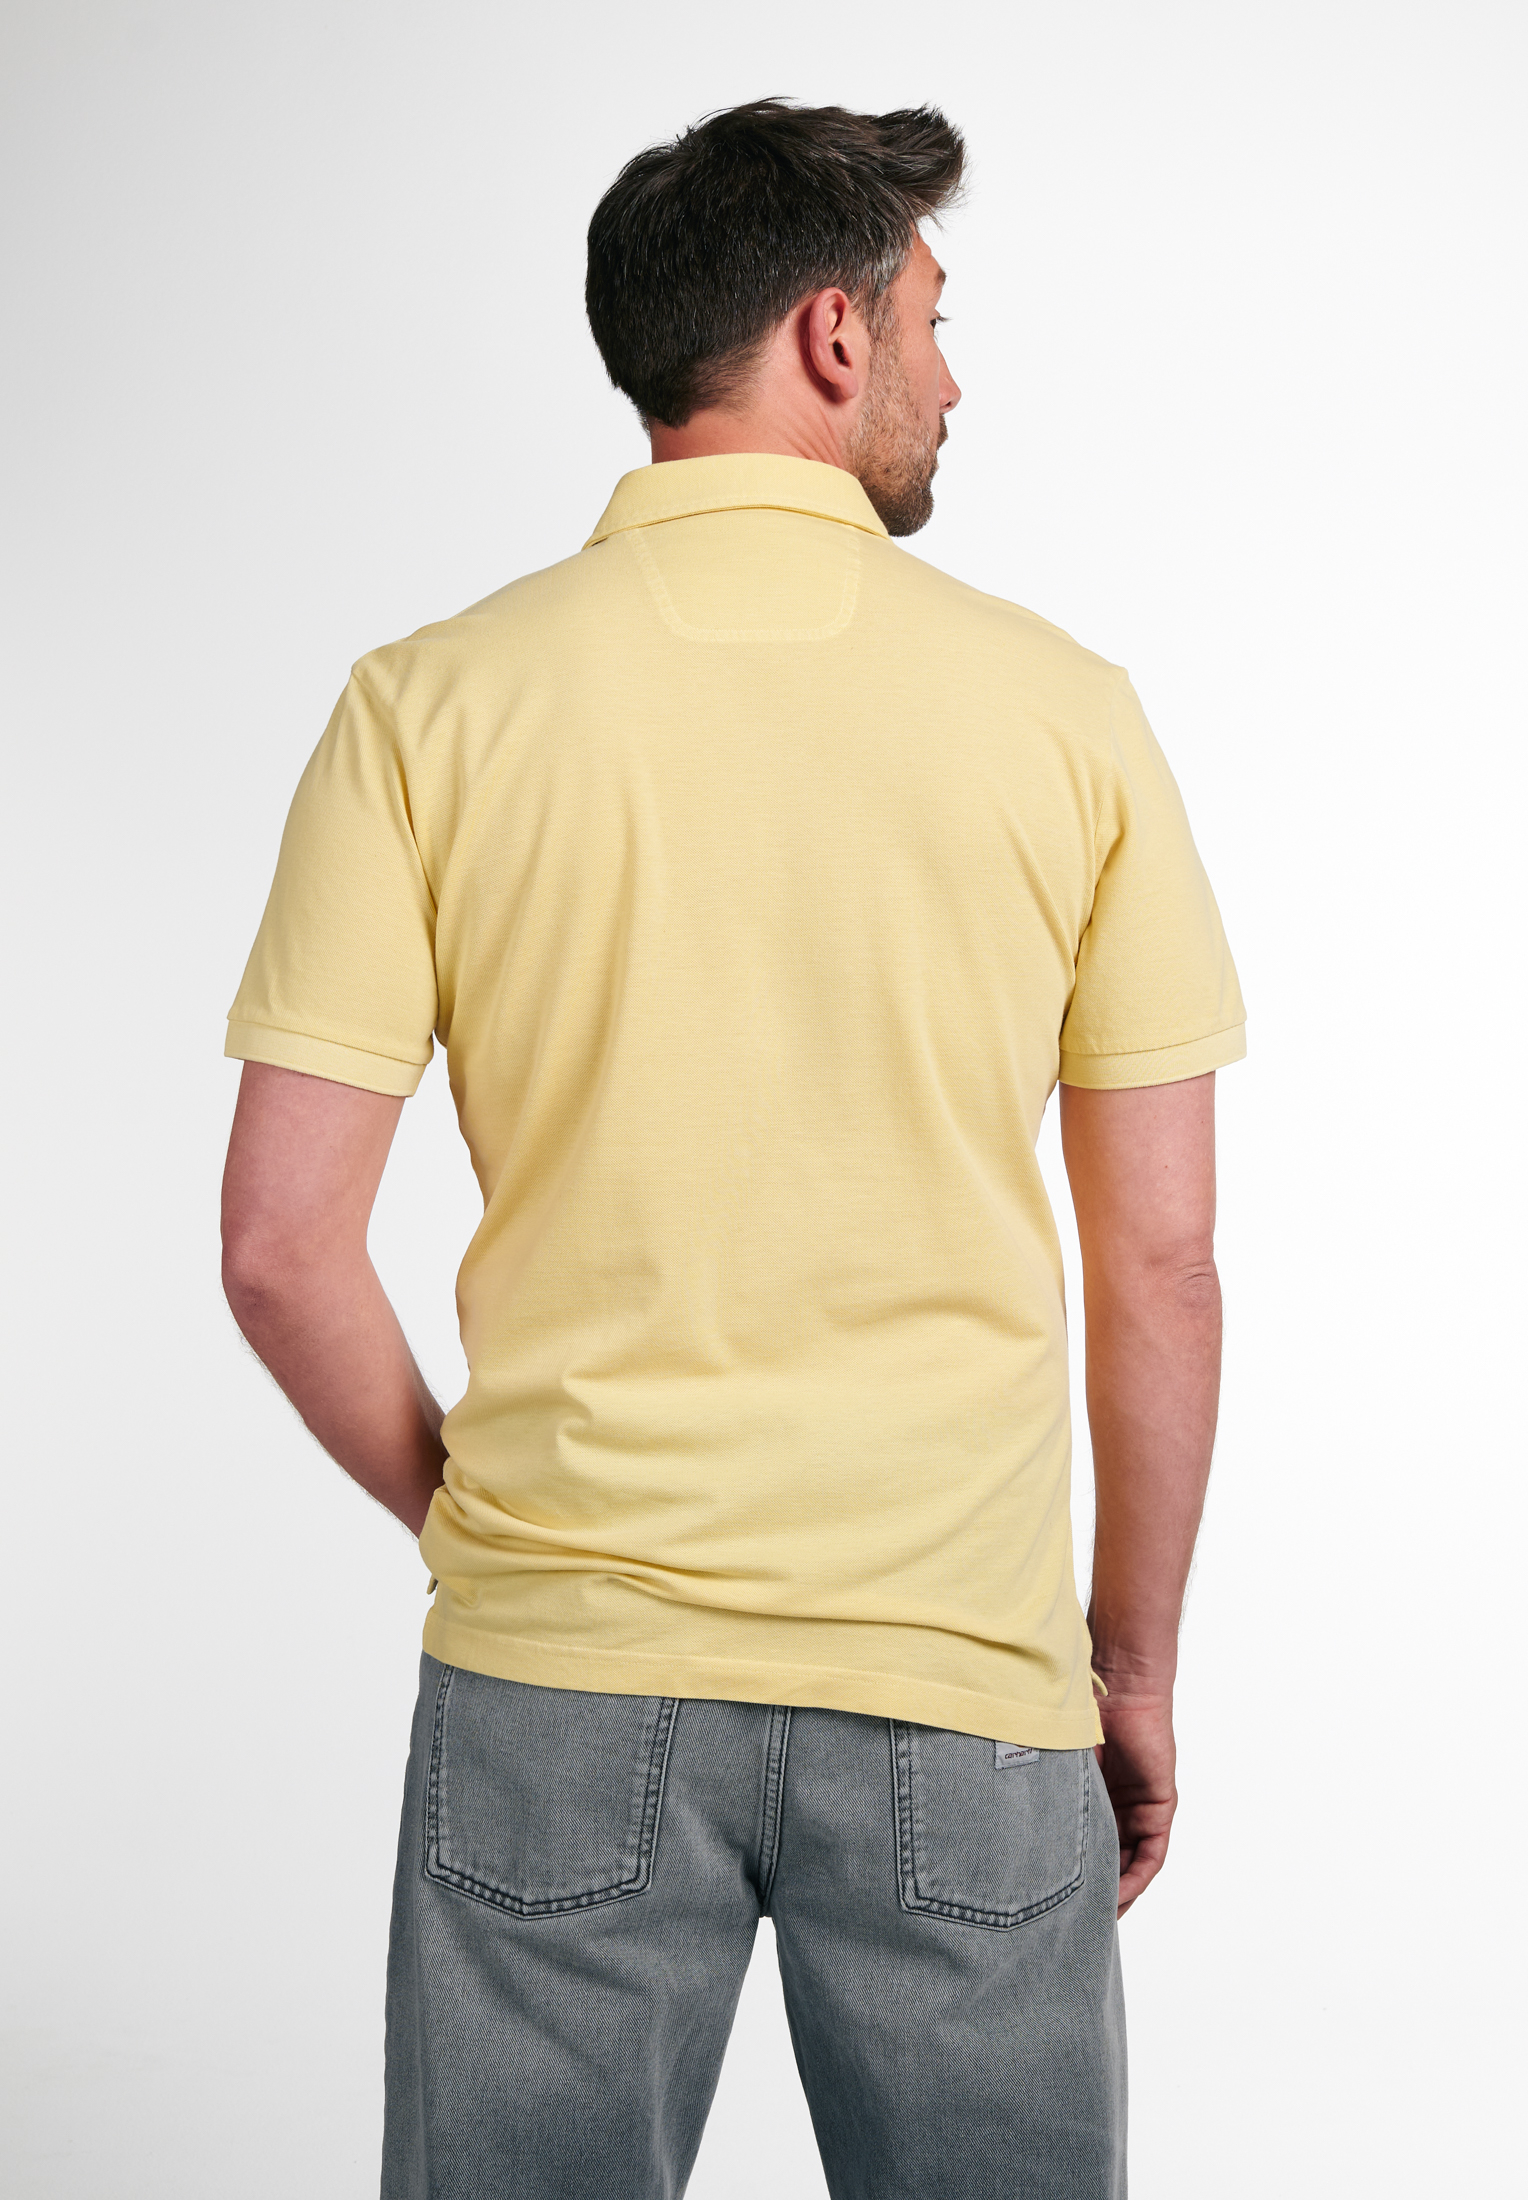 4XL | Poloshirt | in unifarben | | 1SP00087-07-01-4XL-1/2 Kurzarm FIT MODERN gelb gelb